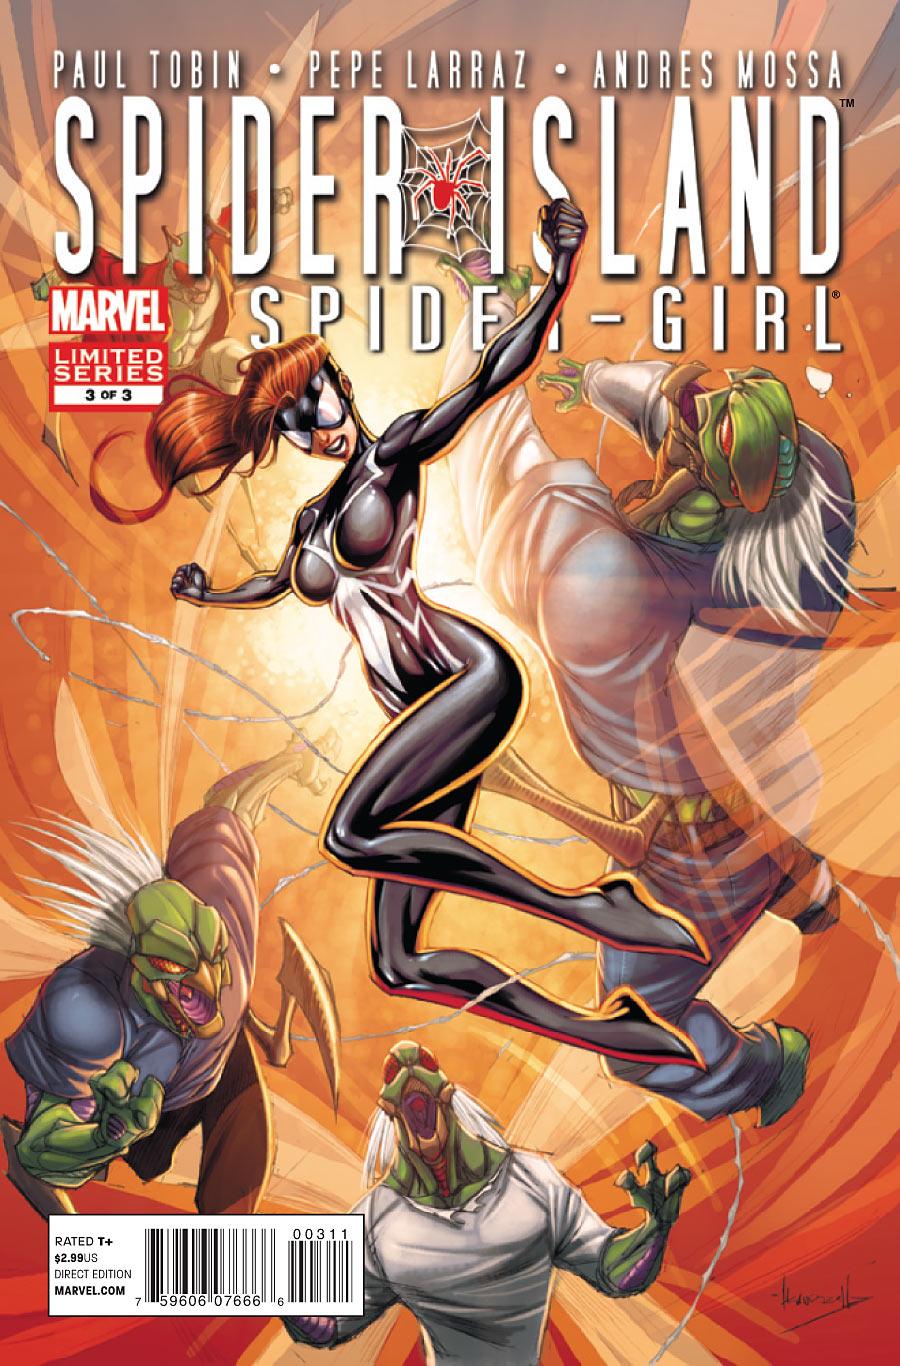 Spider-Island: The Amazing Spider-Girl Vol. 1 #3